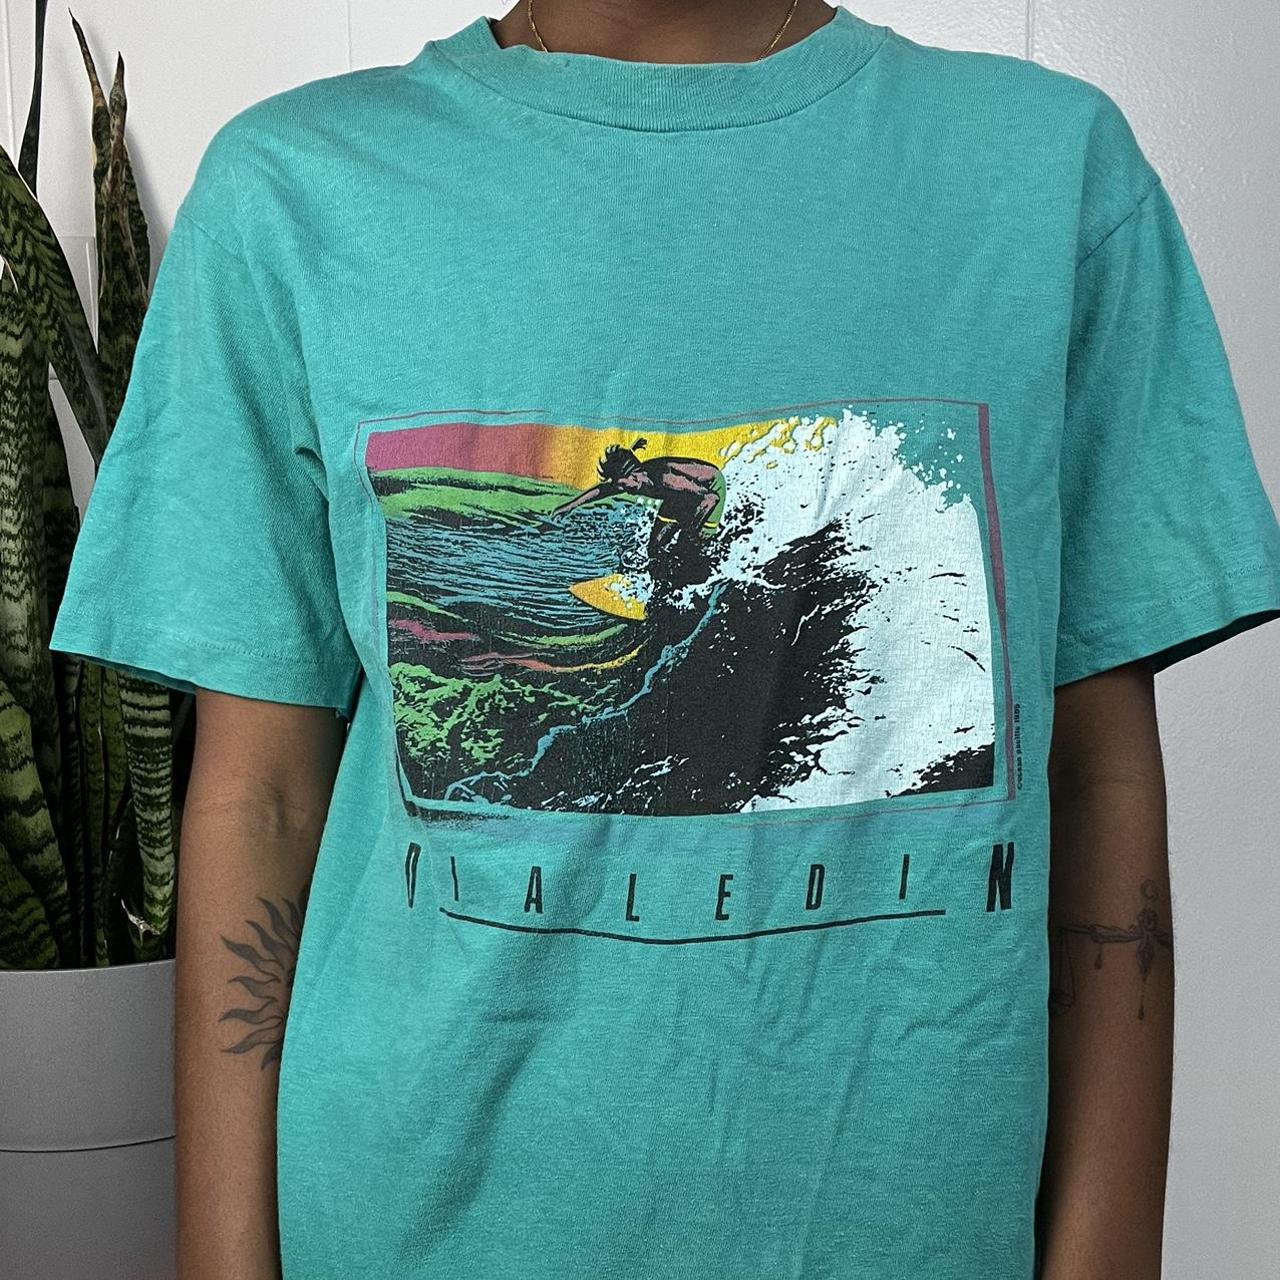 Ocean Pacific Men's Green T-shirt (2)